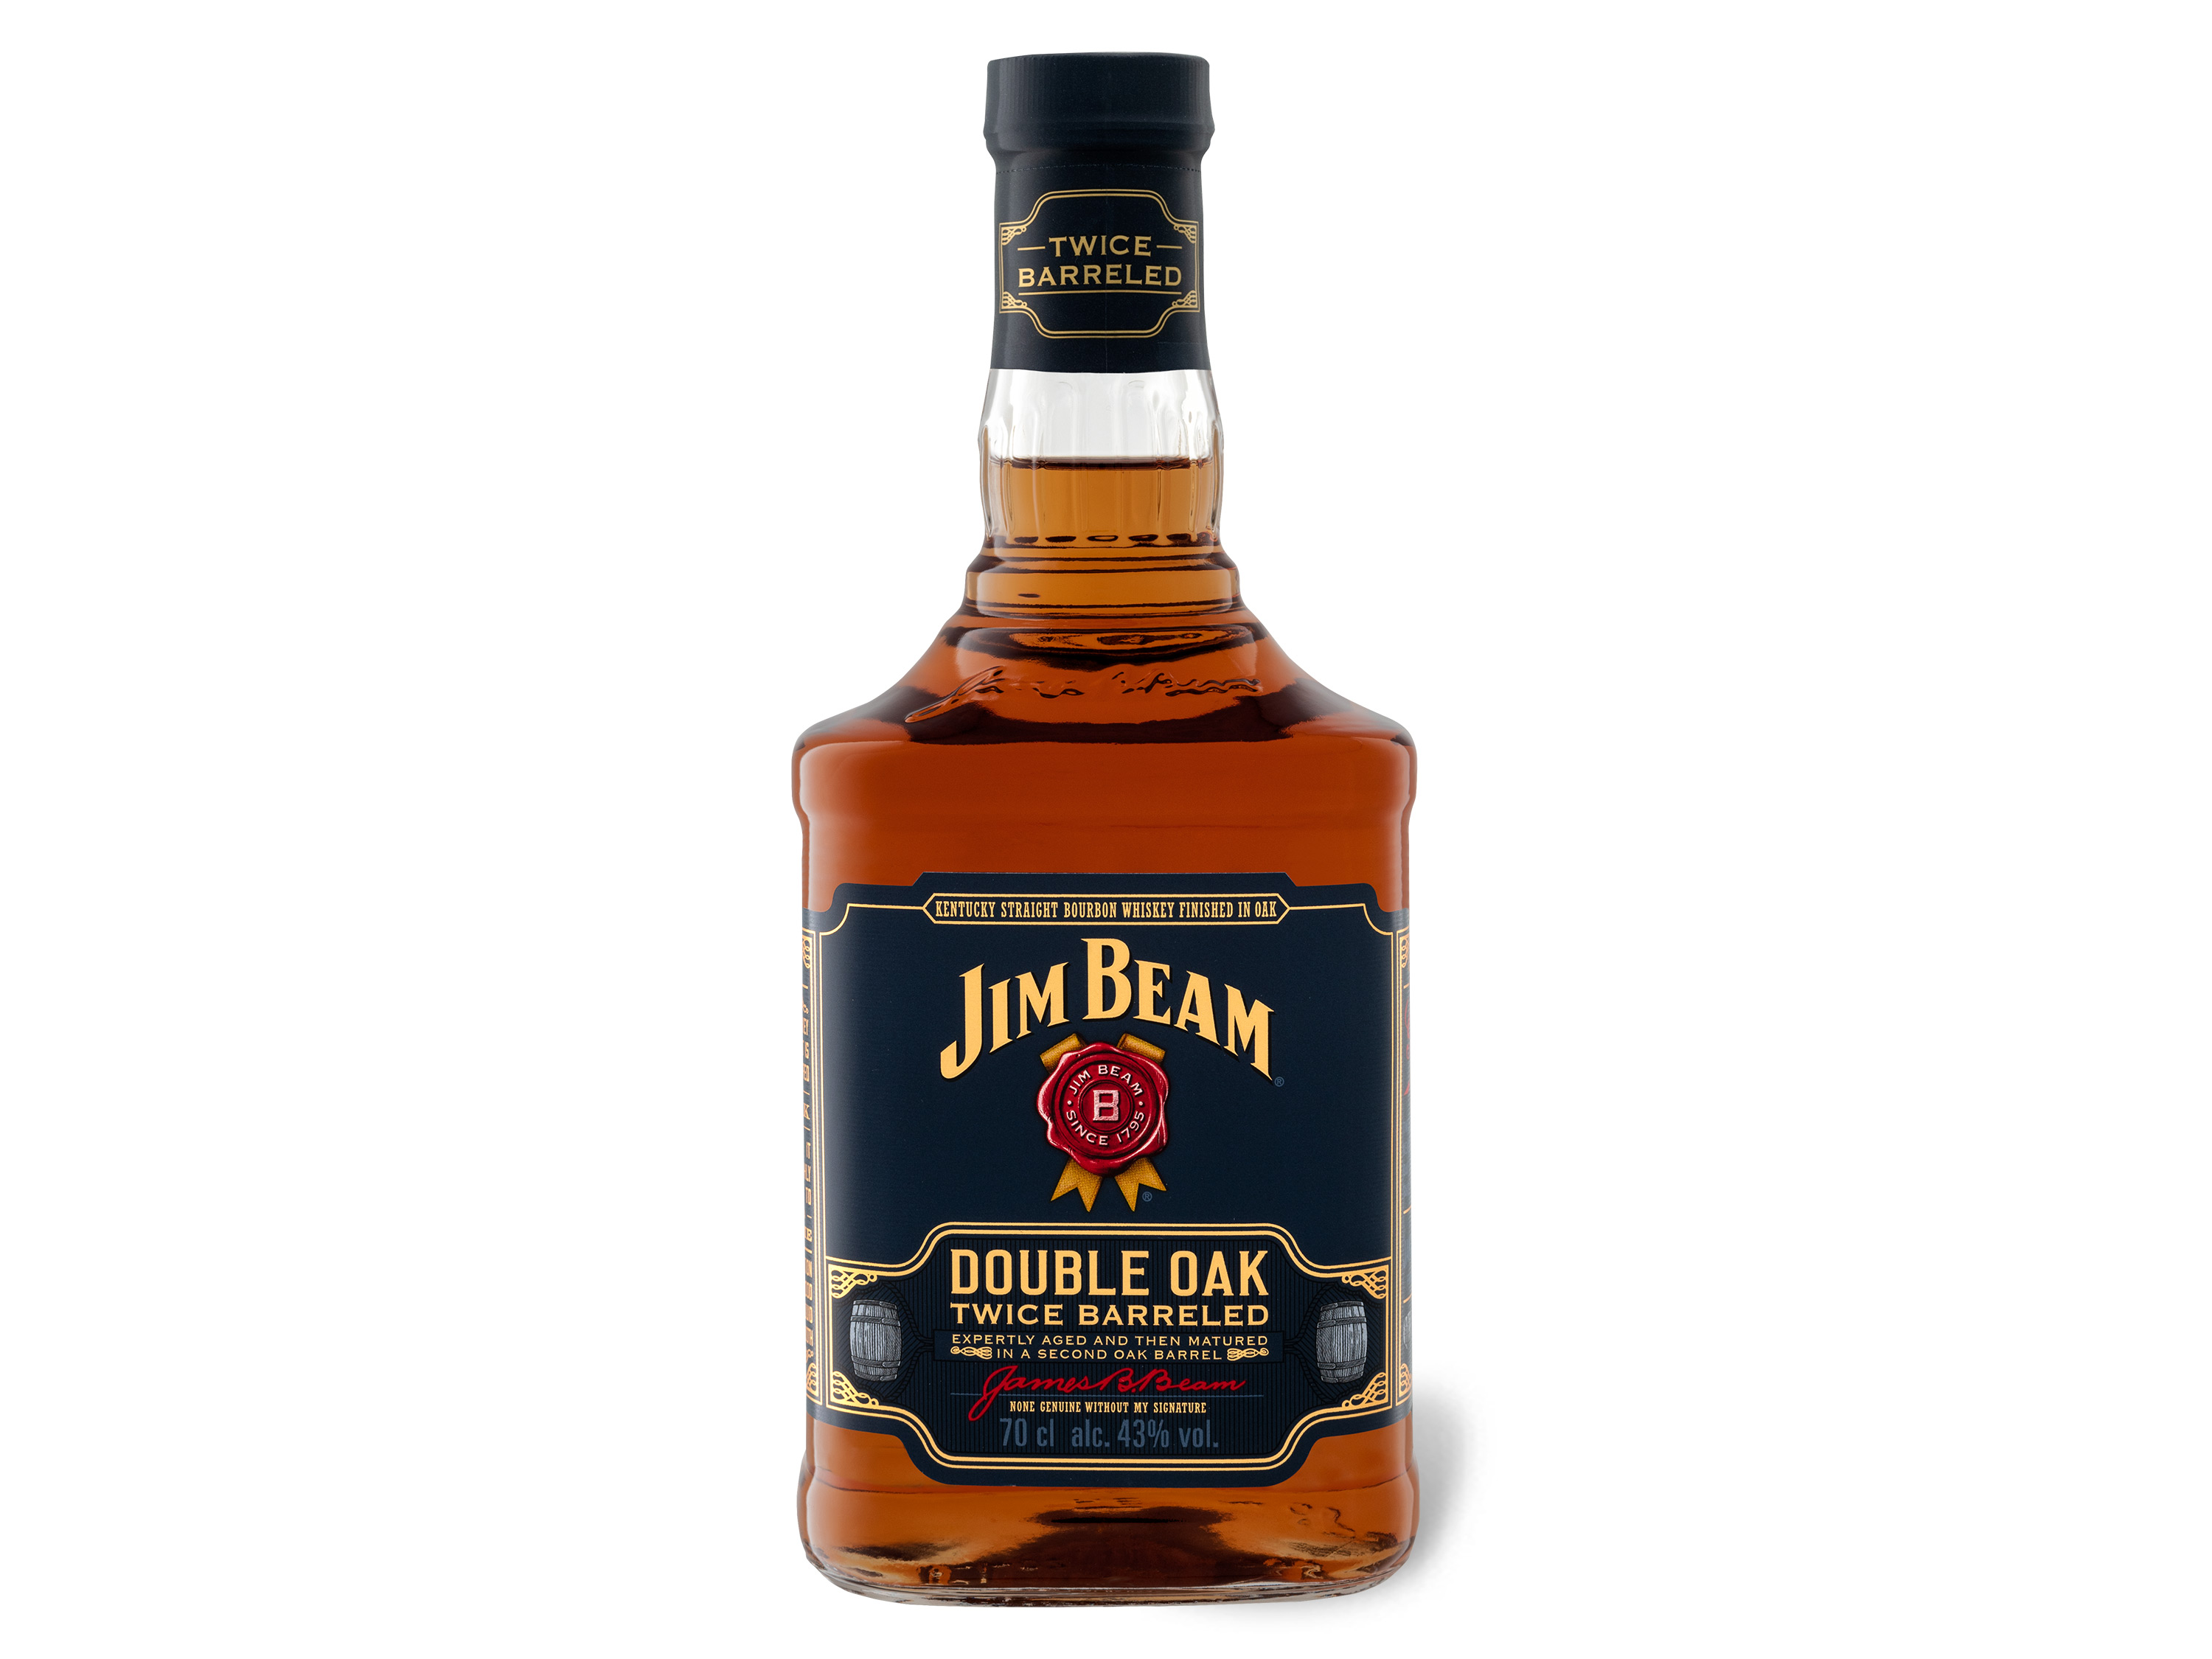 JIM BEAM Double Oak Twice Barreled Bourbon Whiskey 43% Vol